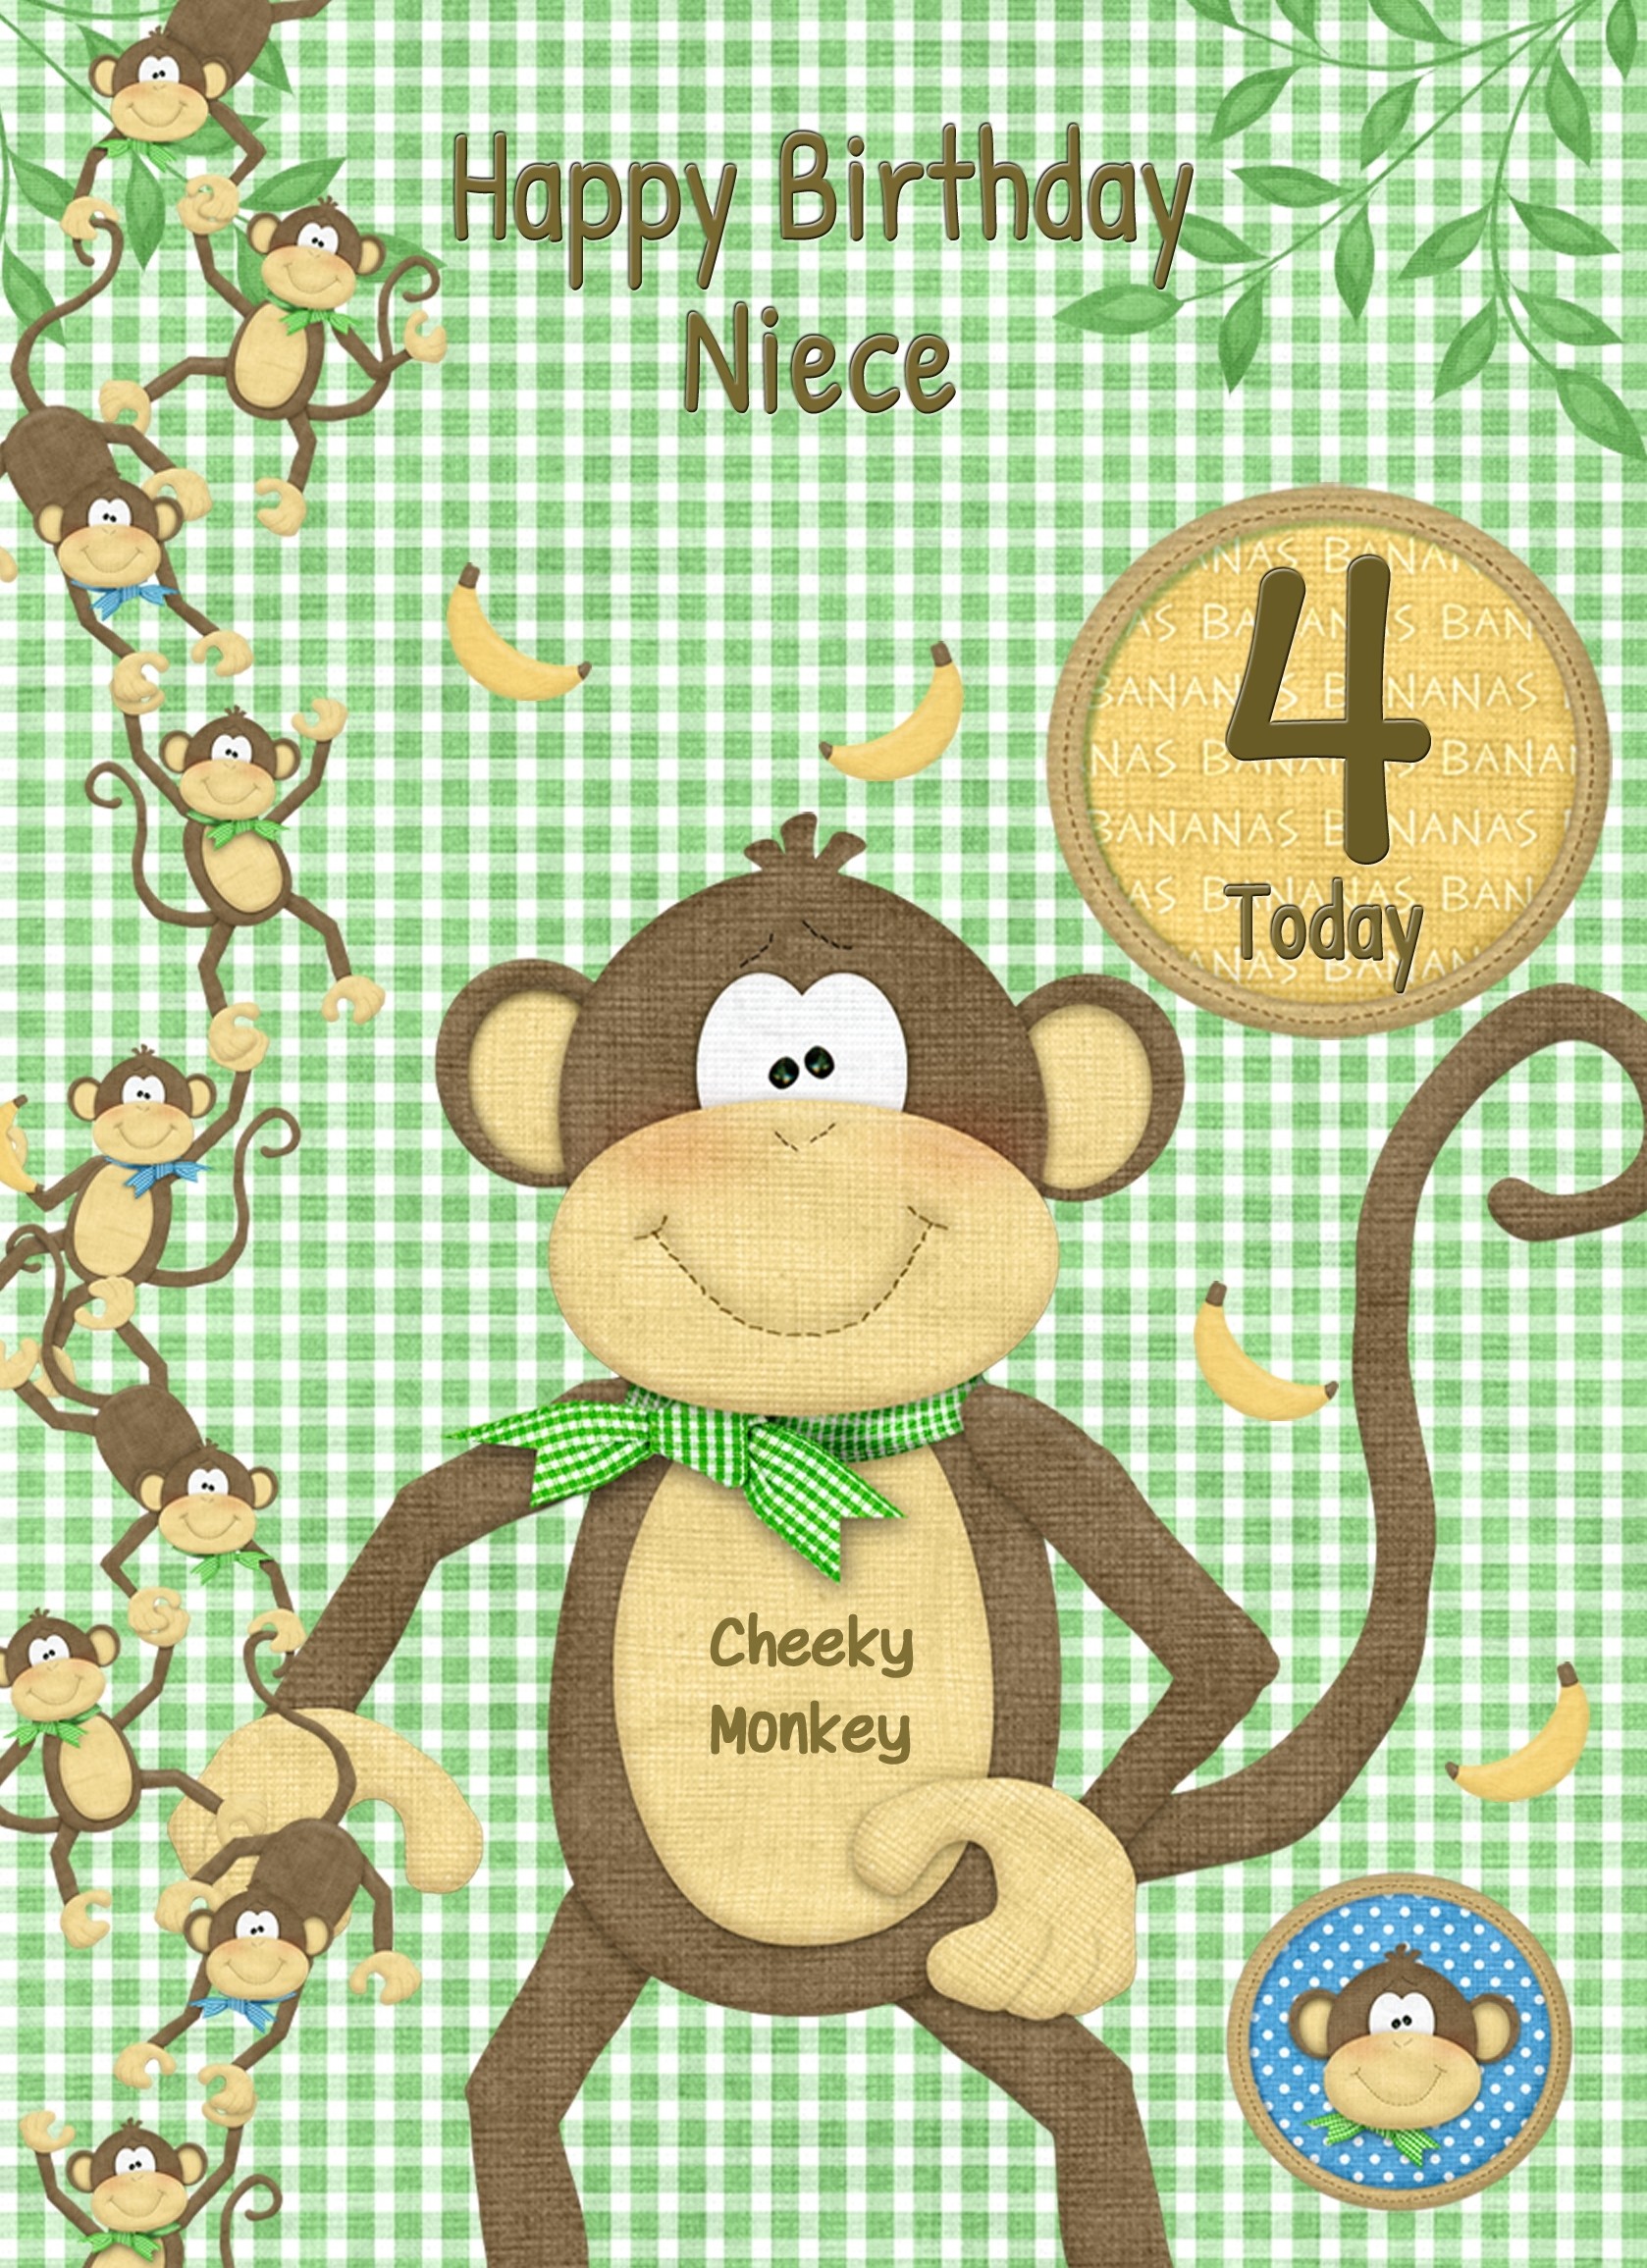 Kids 4th Birthday Cheeky Monkey Cartoon Card for Niece